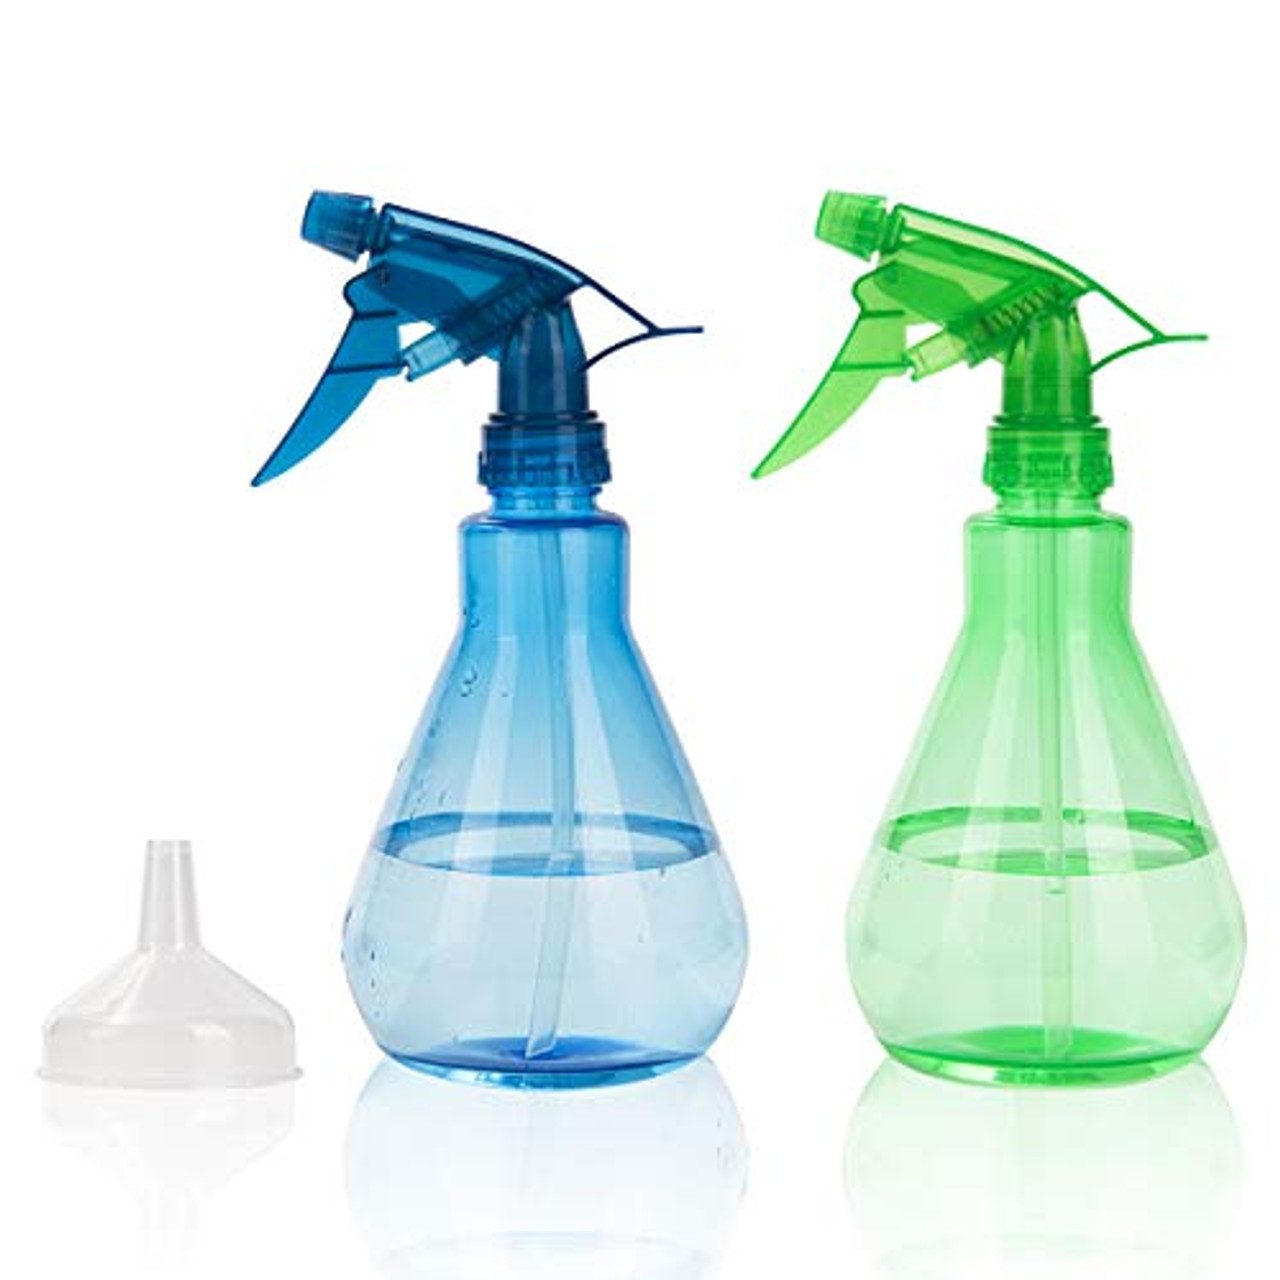 How to Clean Spray Bottles, Misting Spray Bottles